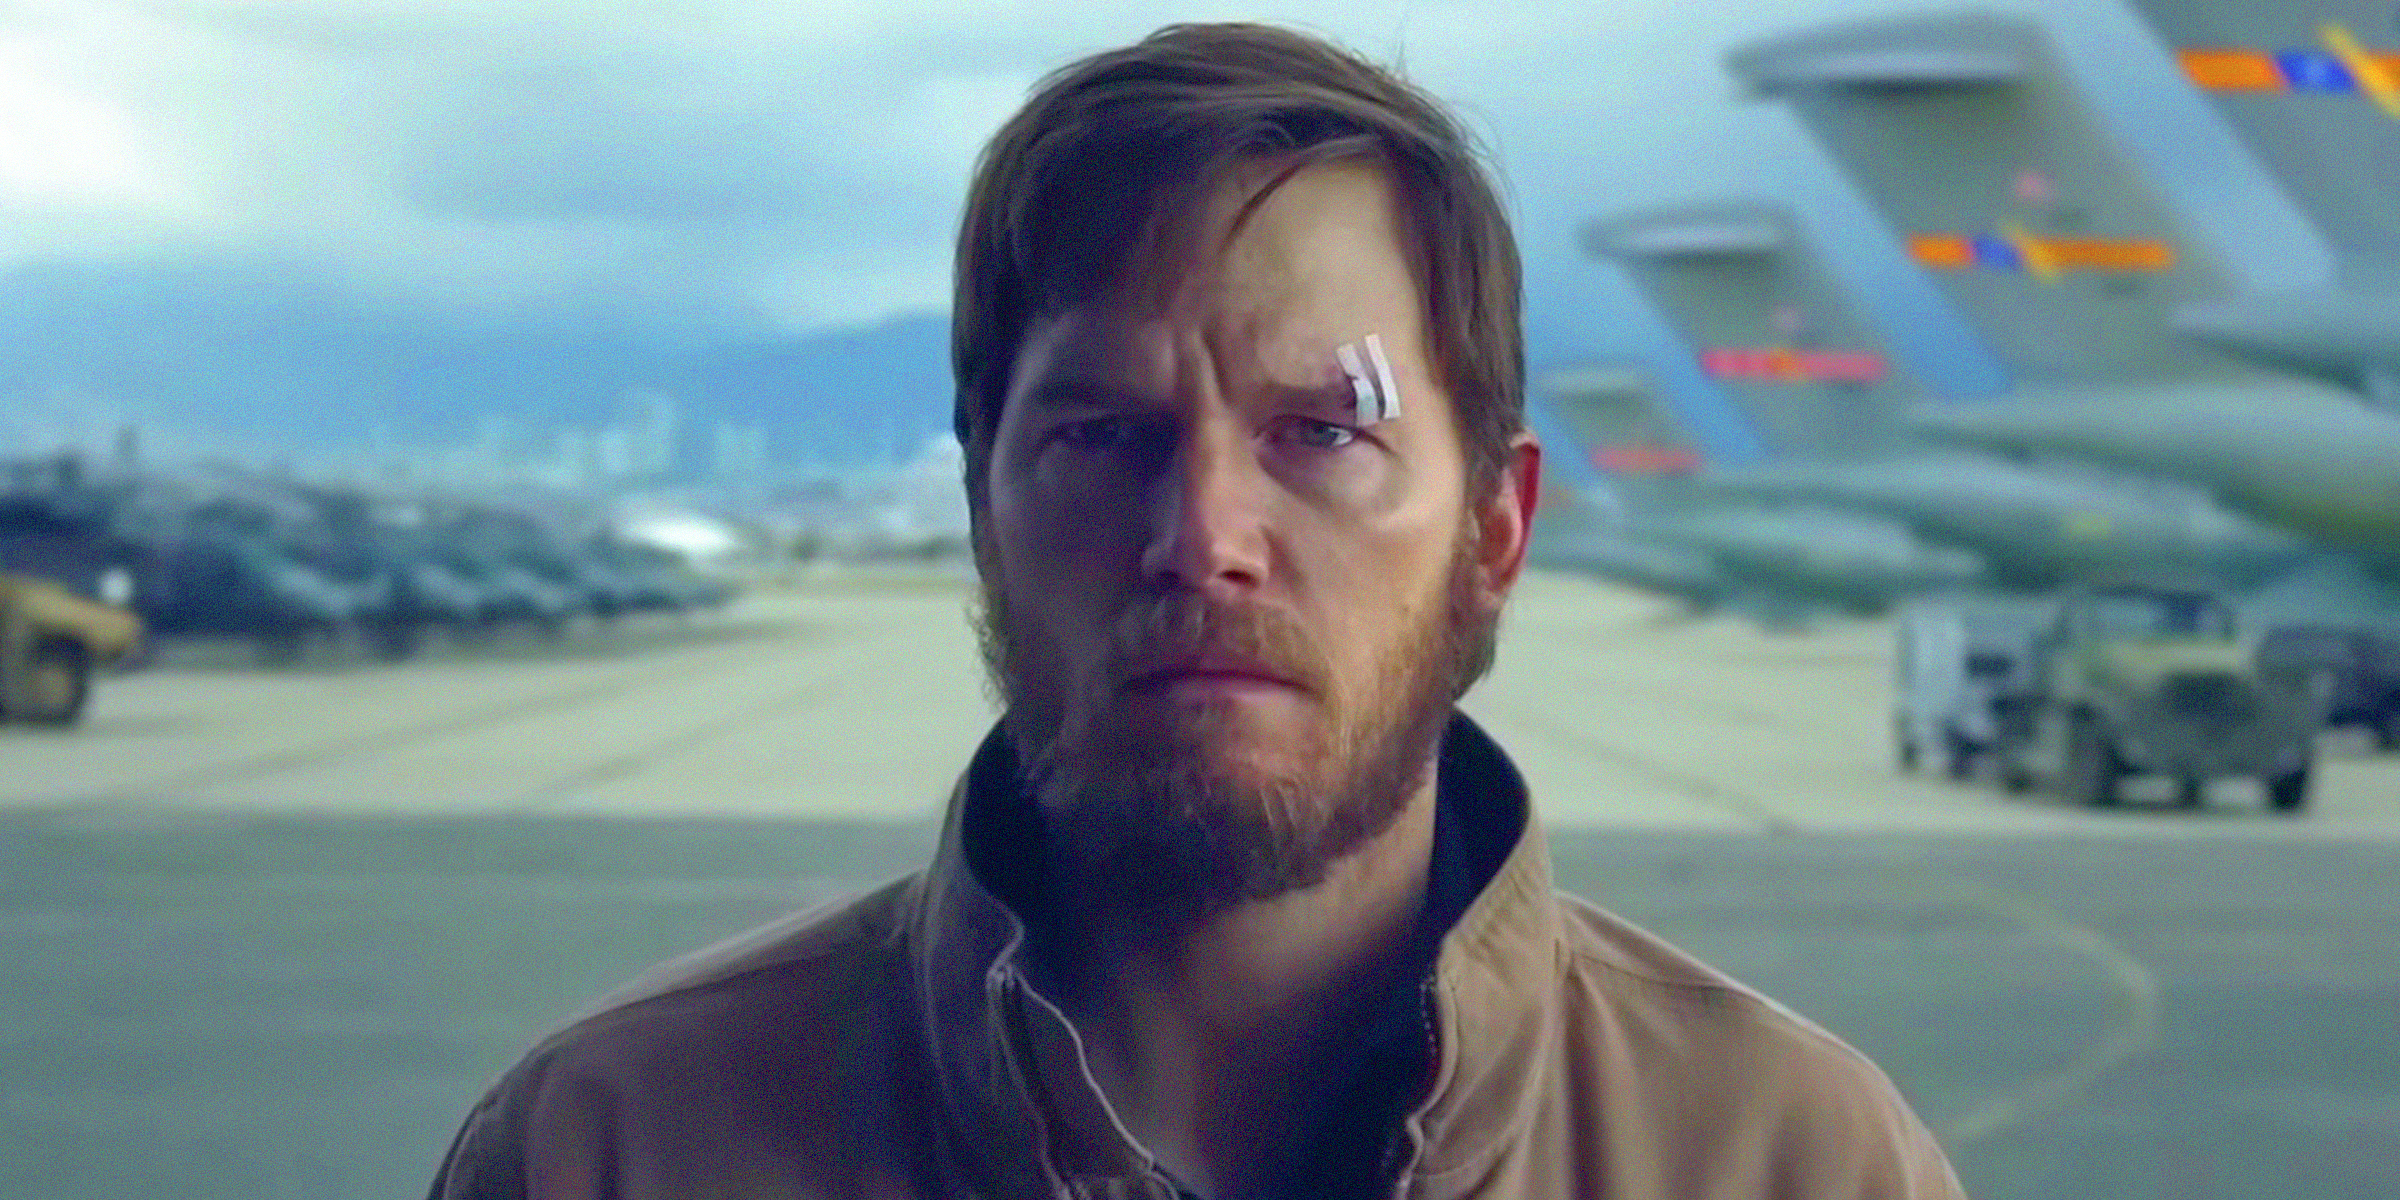 Chris Pratt as James Reece in the series "The Terminal List" | Source: Youtube/Prime Video